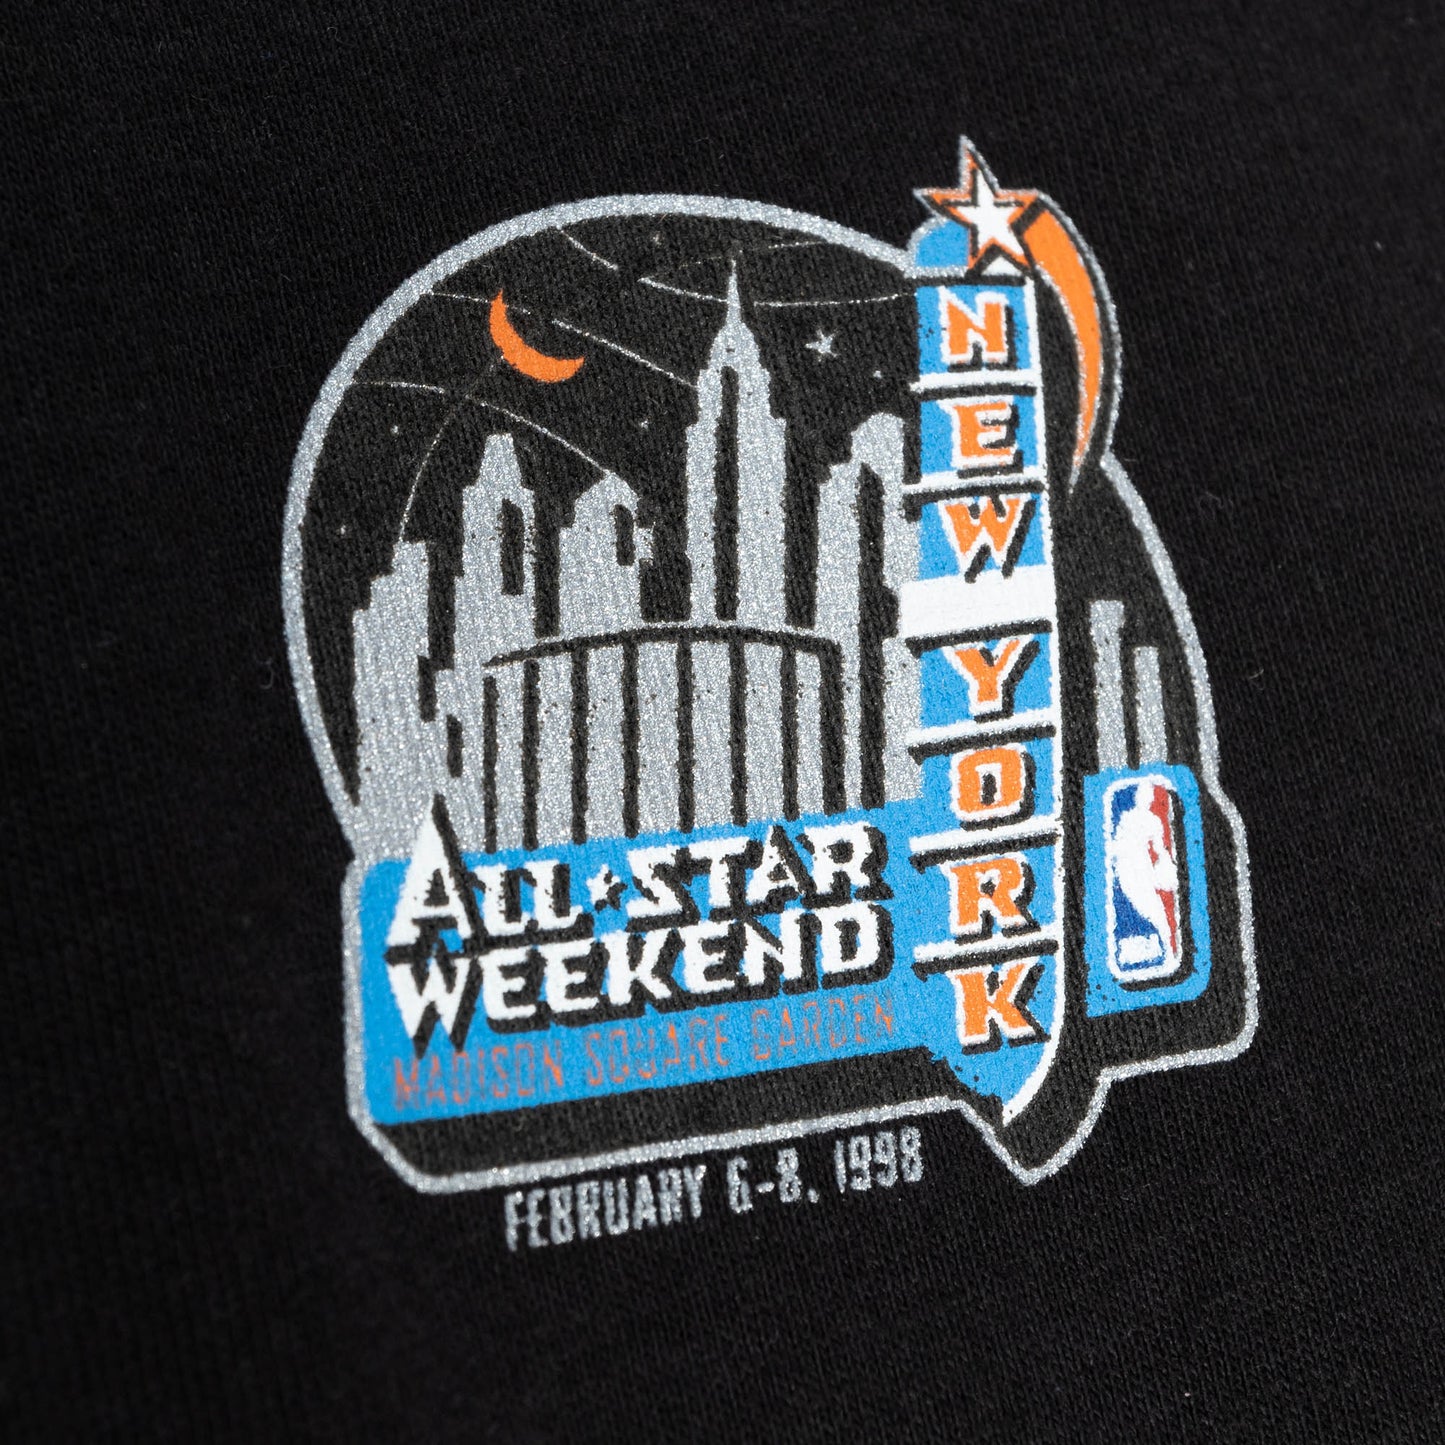 New York Knicks Mitchell & Ness # 3 John Starks Flight Script Player T-Shirt